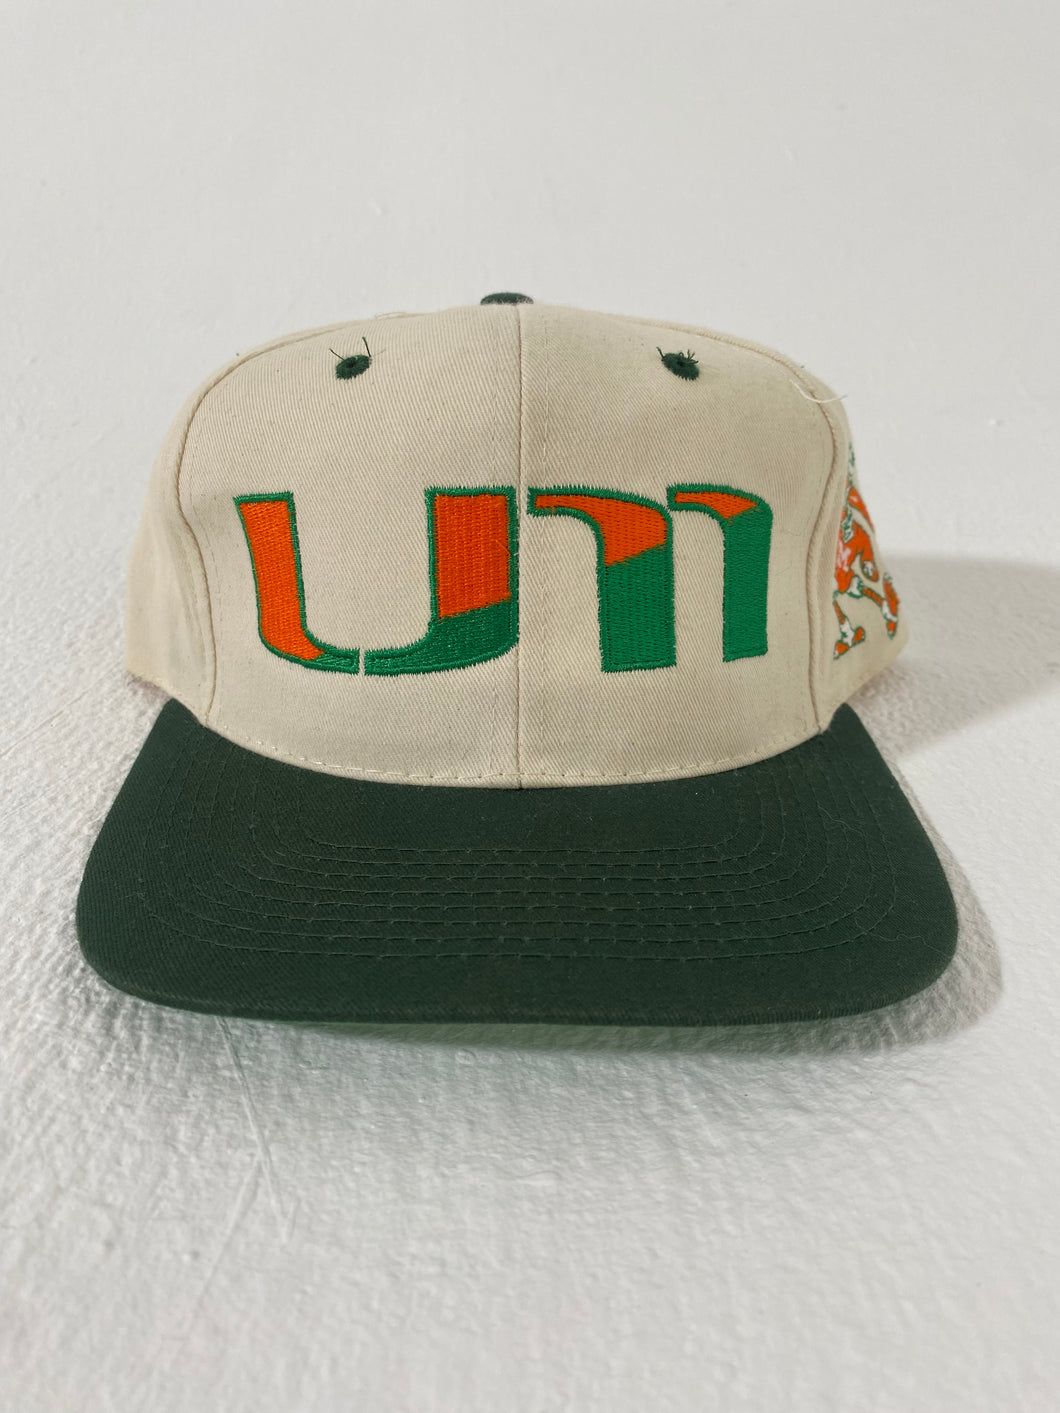 Vintage 1990's University of Miami Hurricanes Snapback